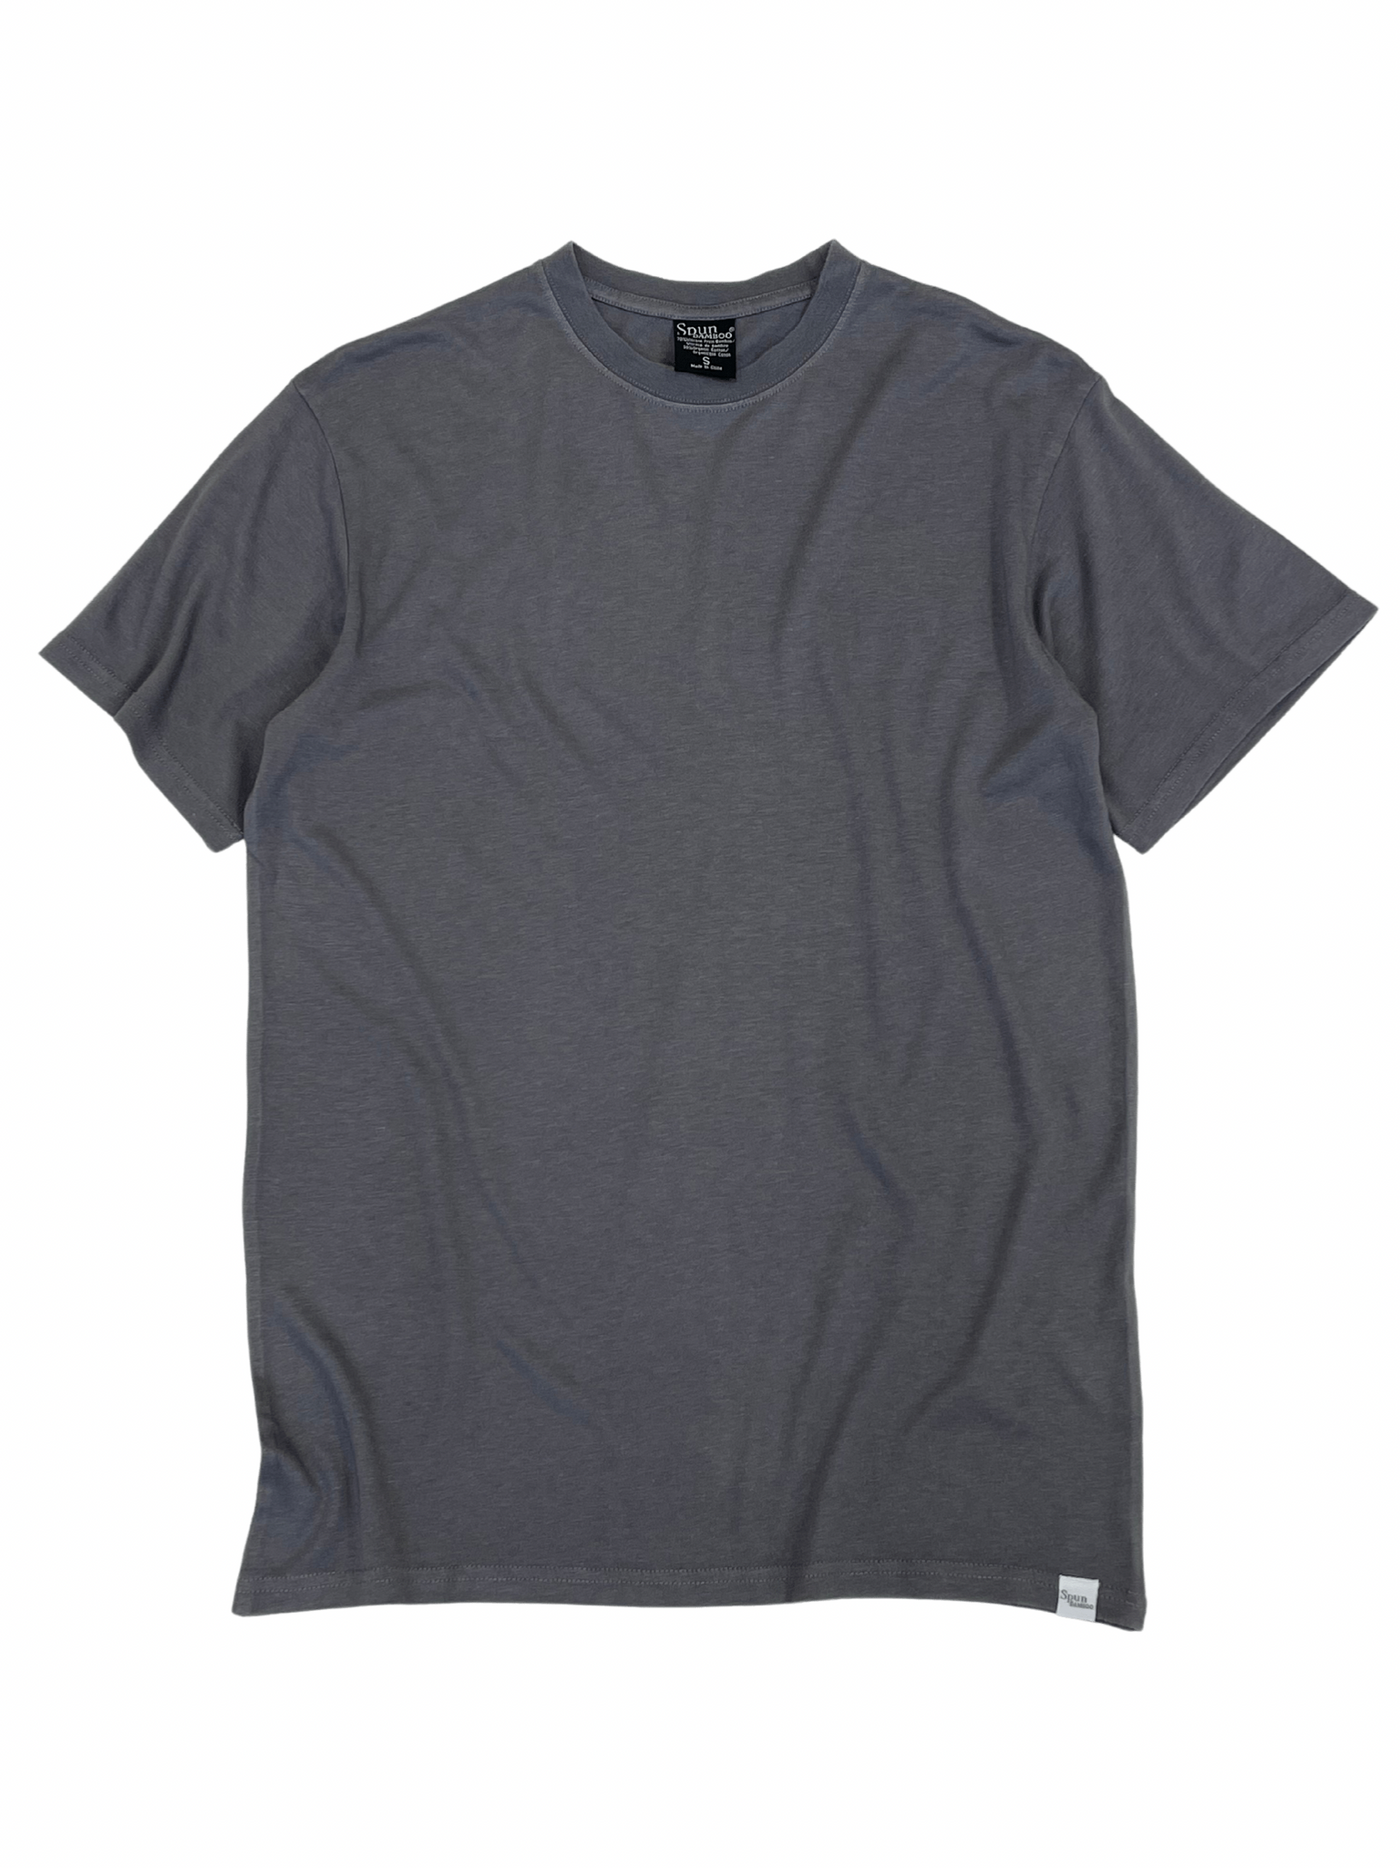 The Original Men's Bamboo Viscose/Organic Cotton Short Sleeve T-Shirt - Classic Cut